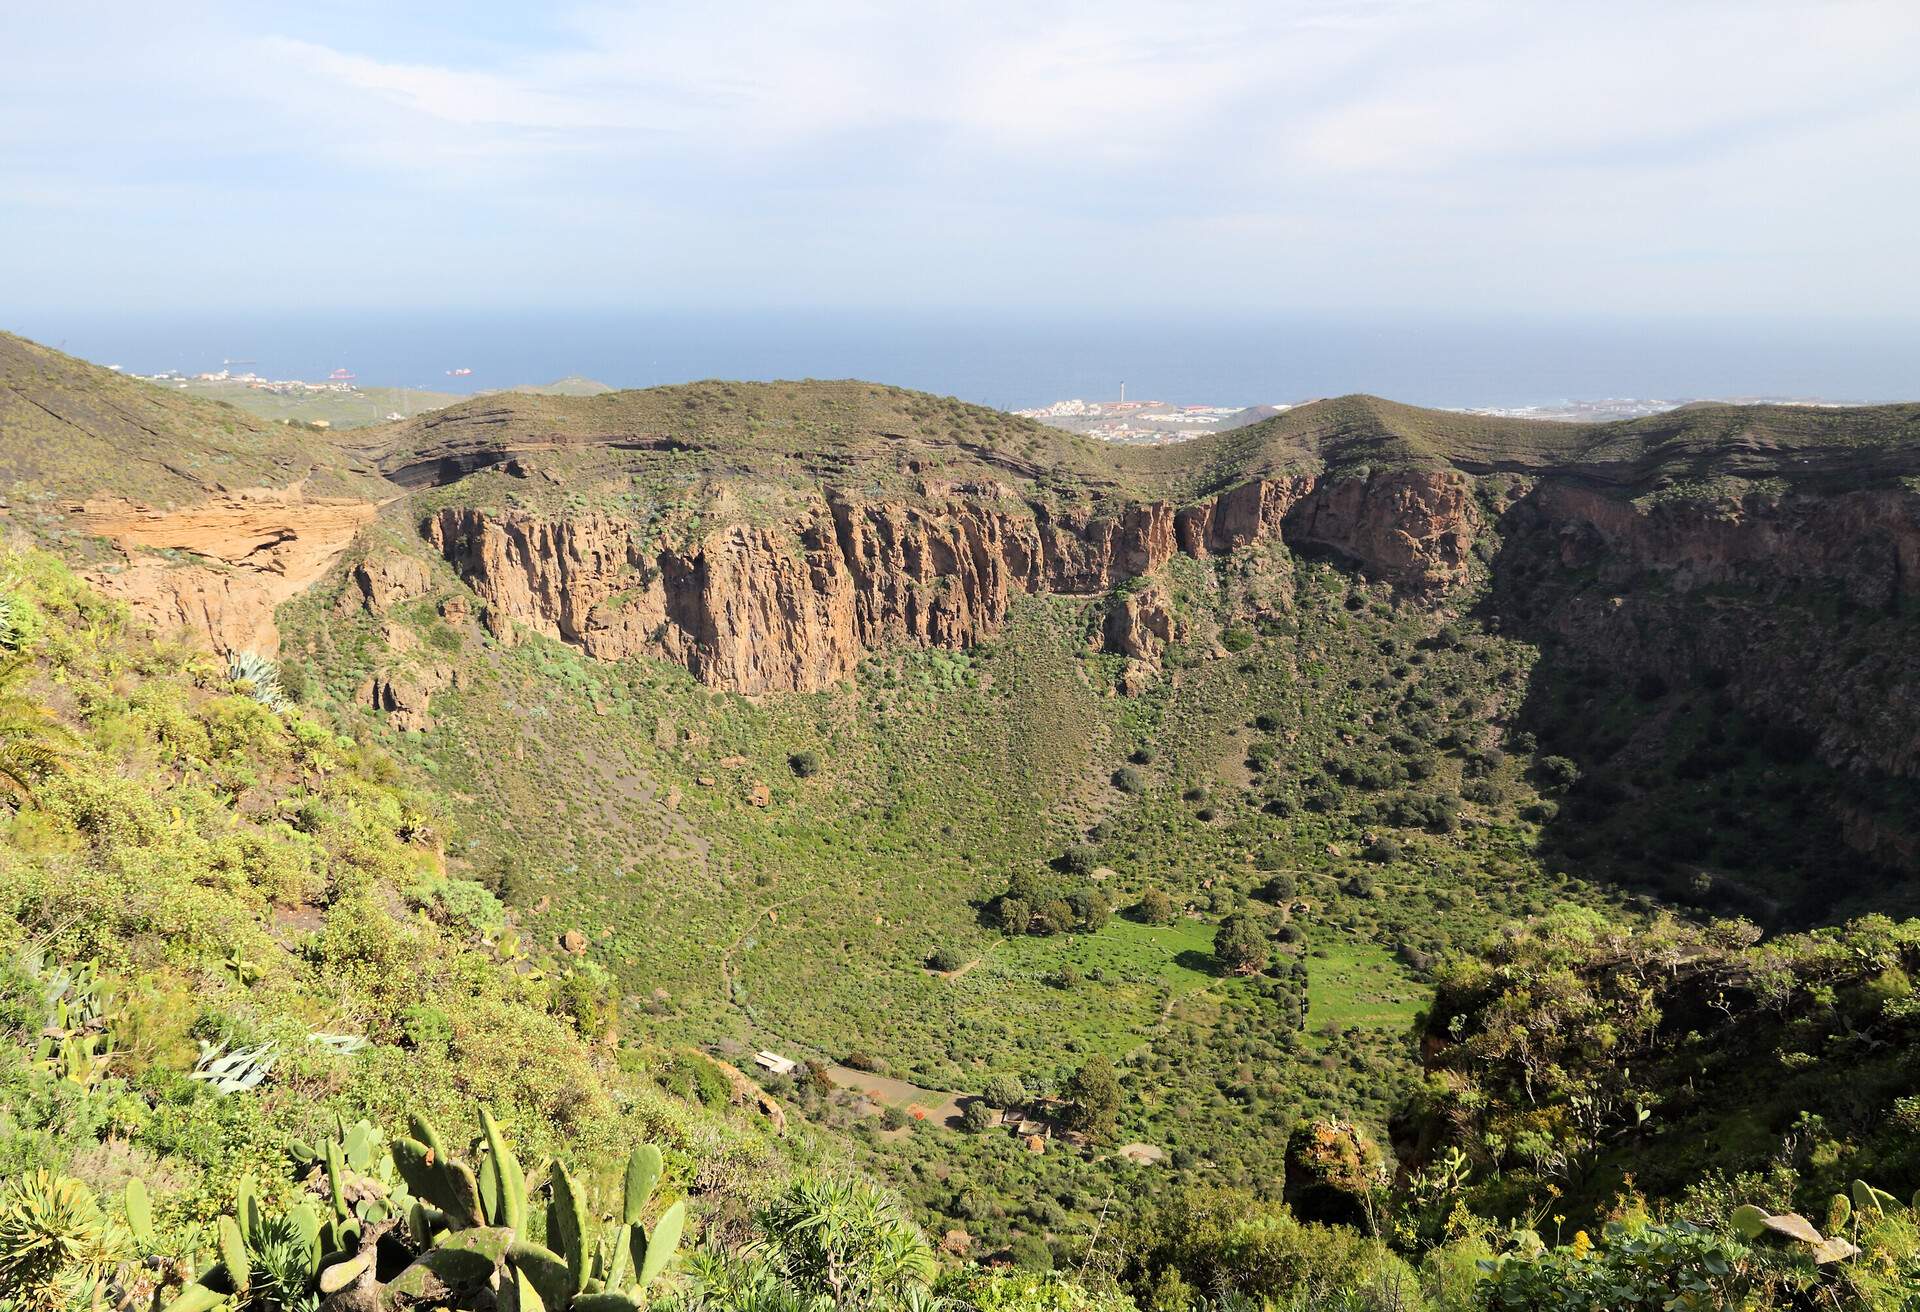 Caldera de Bandama - volcanic landscape of Gran Canaria, Spain.